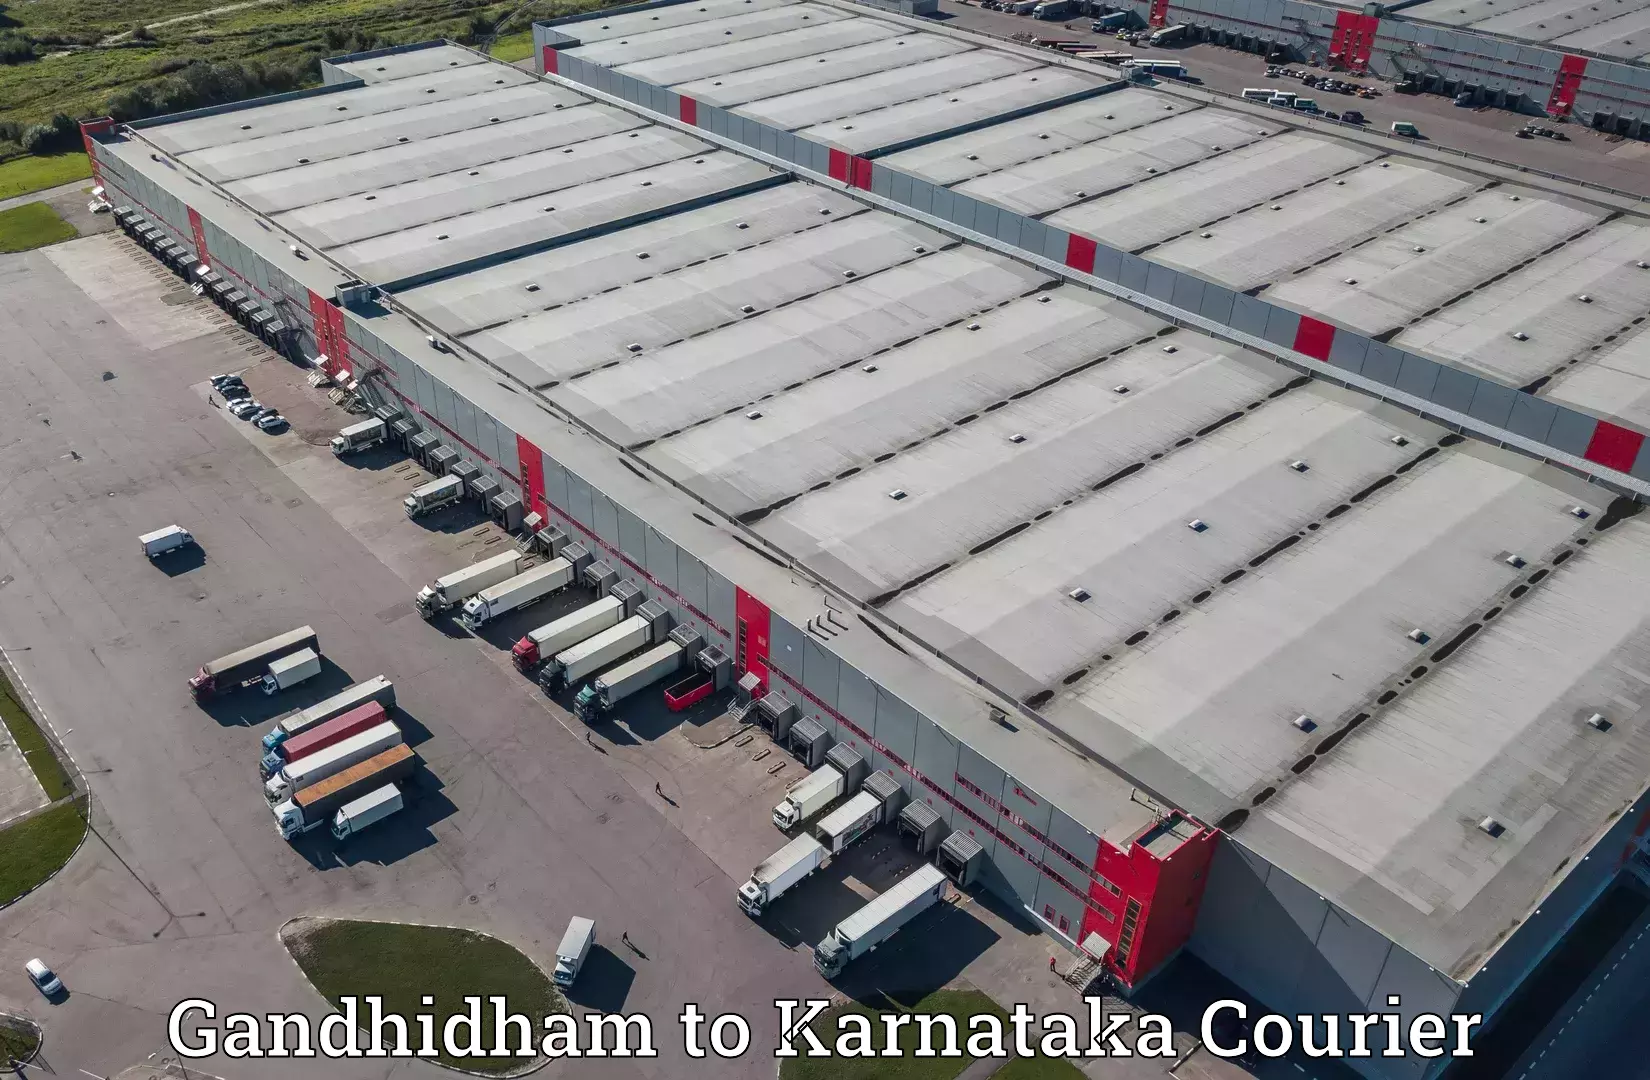 Cargo delivery service Gandhidham to Mandya